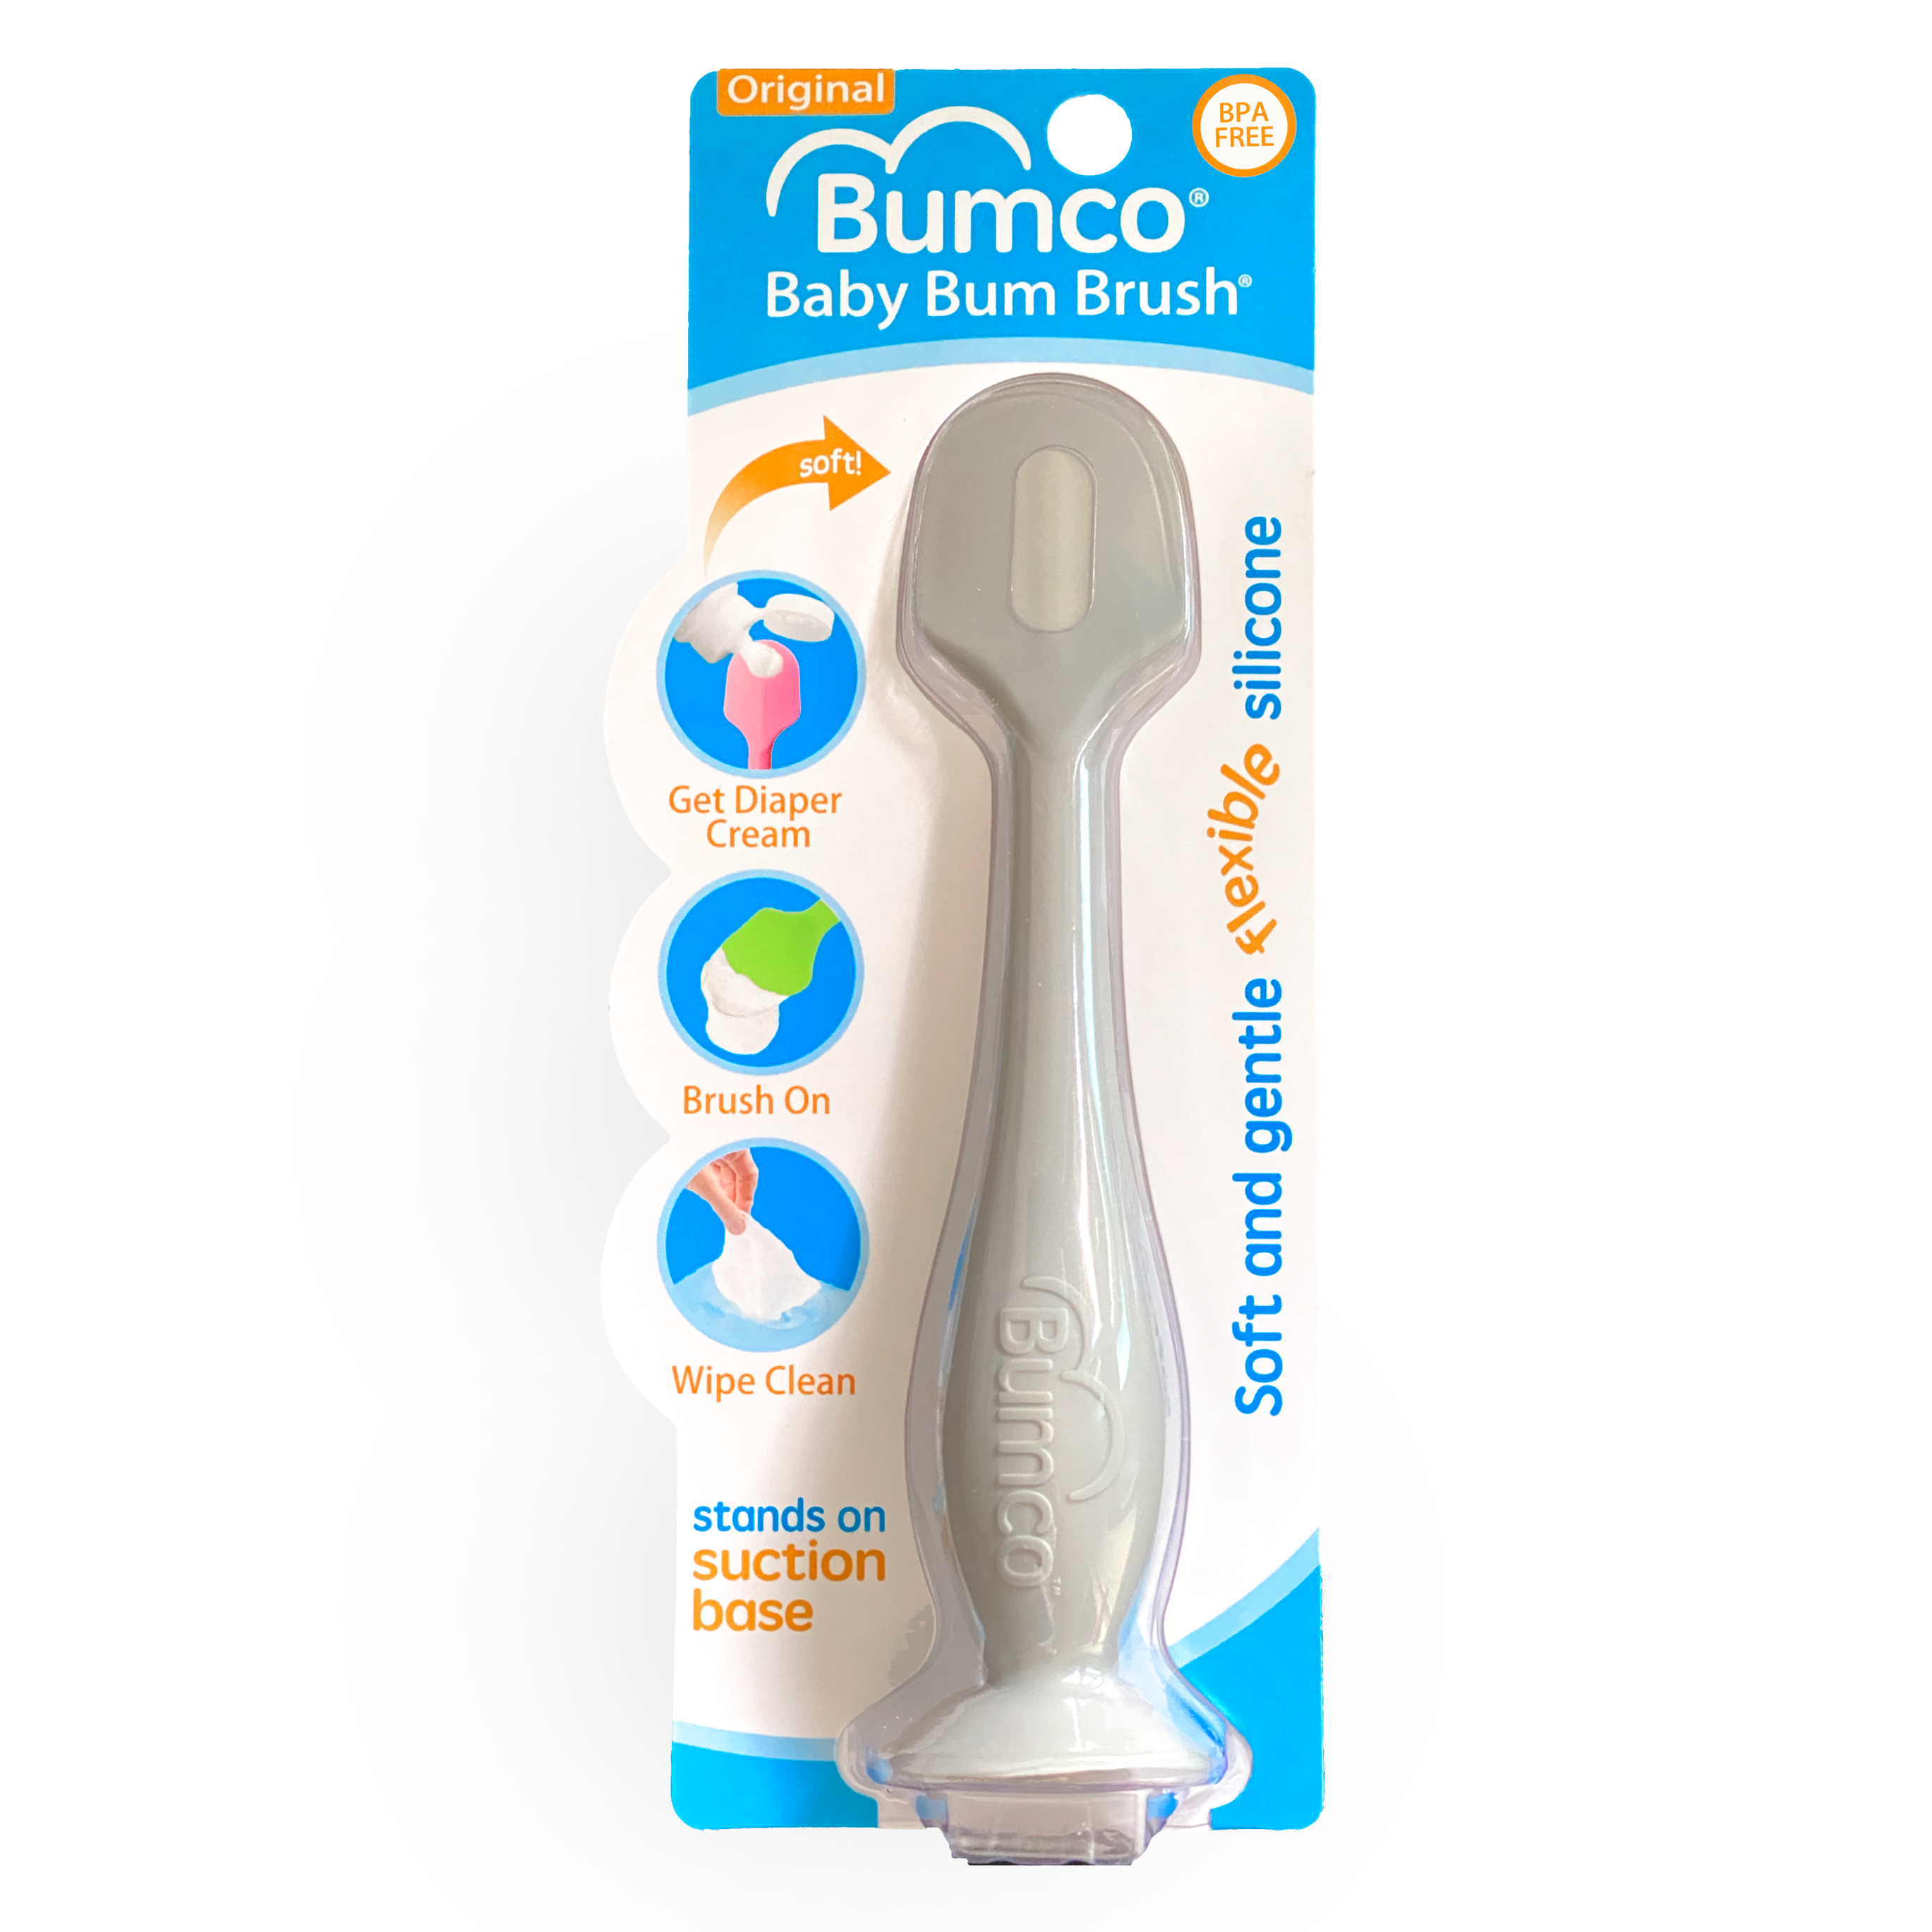 Baby Bum Brush Applicator for Diaper Cream